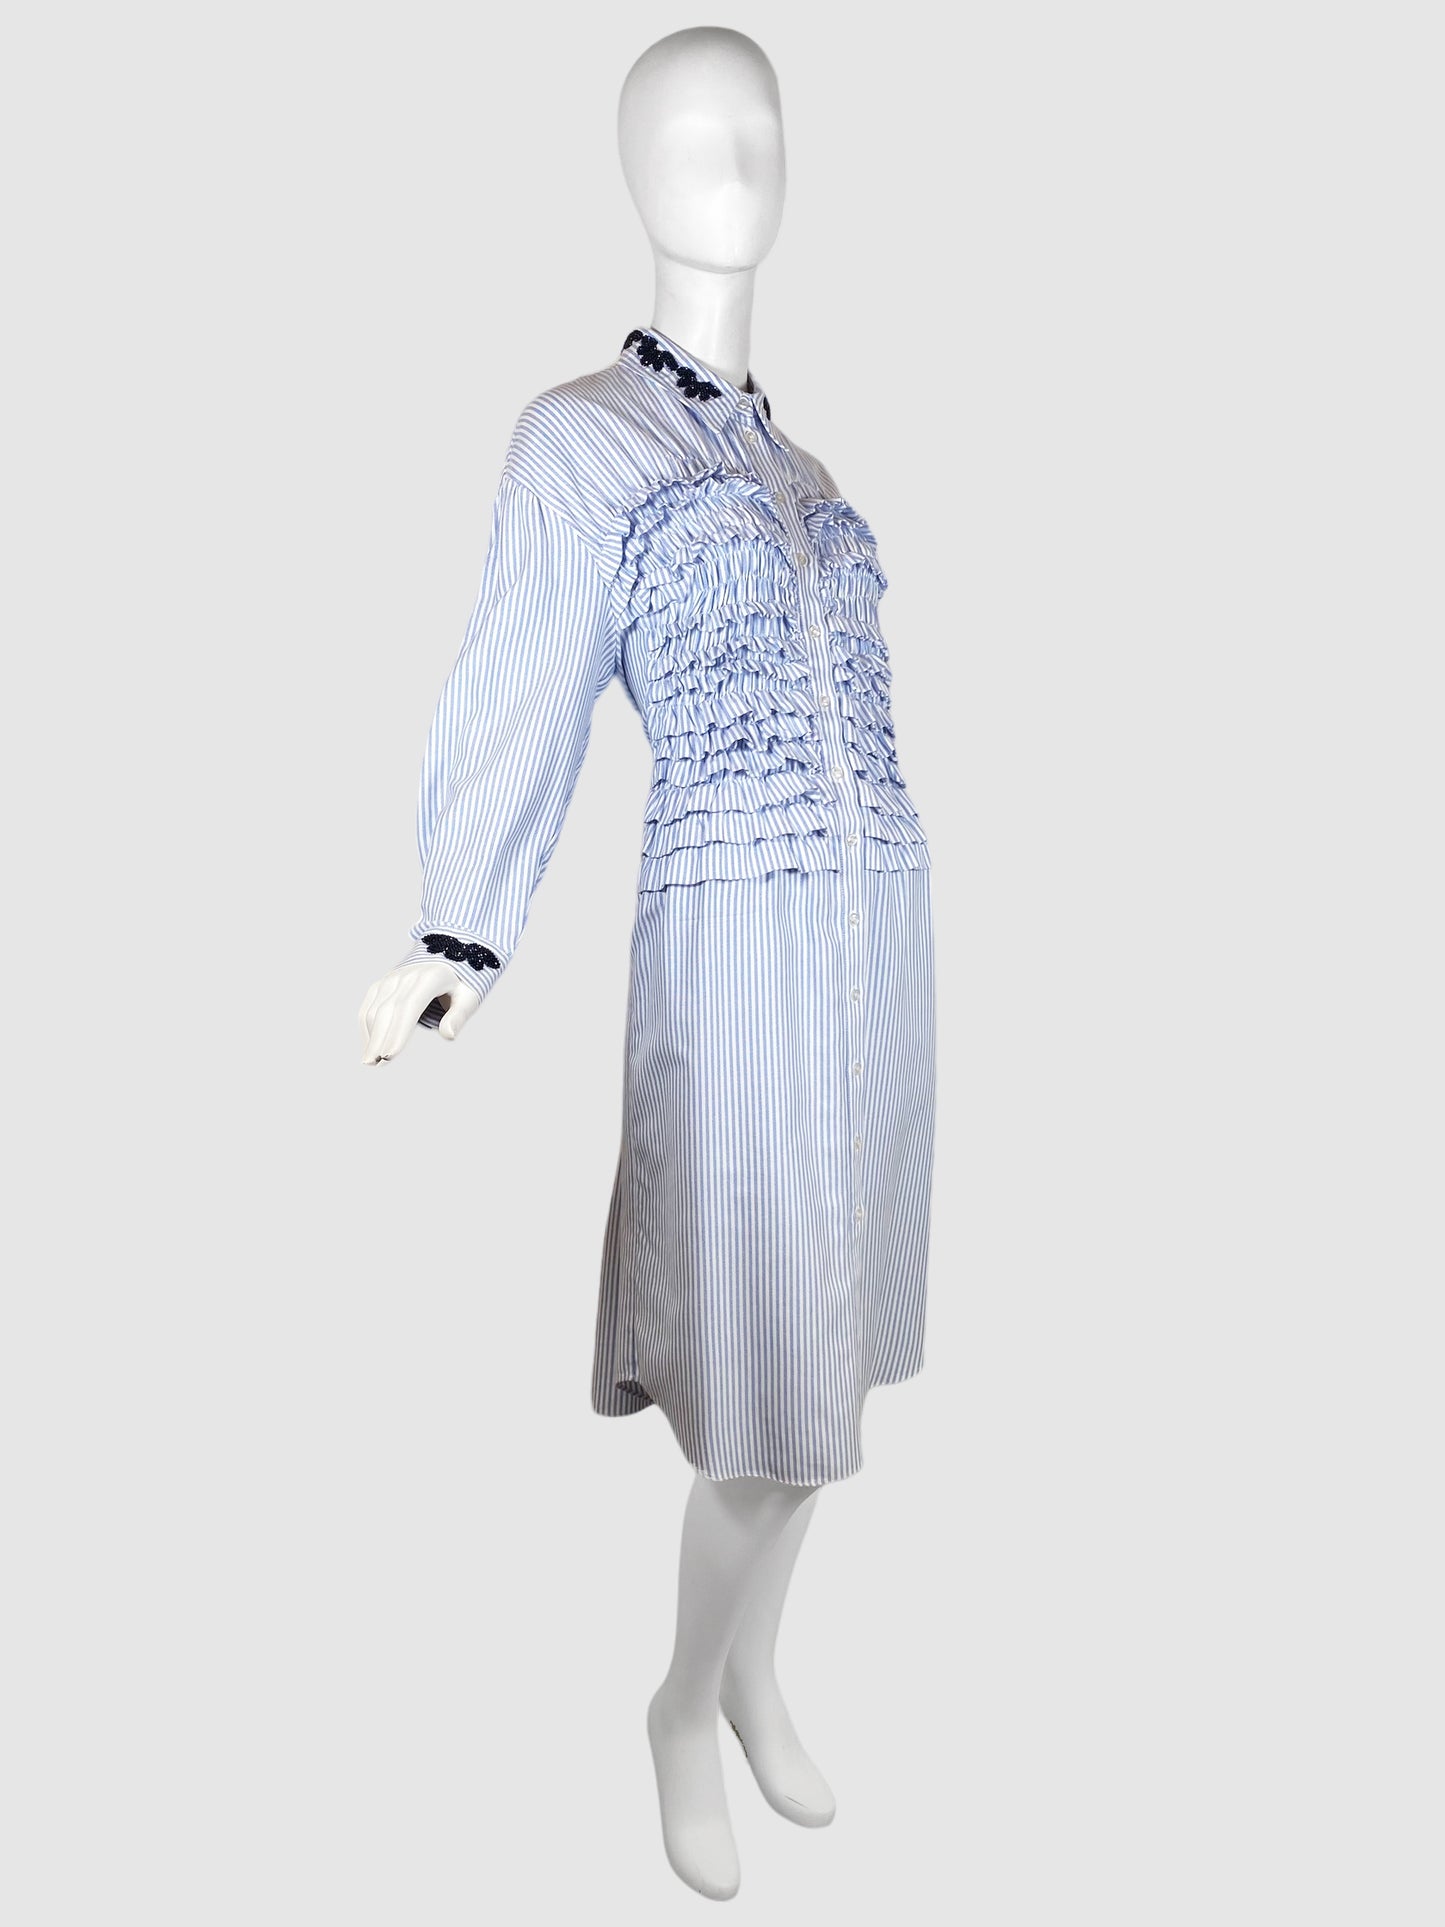 Simone Rocha Striped Beaded Embroidery Shirt Dress - Size 10